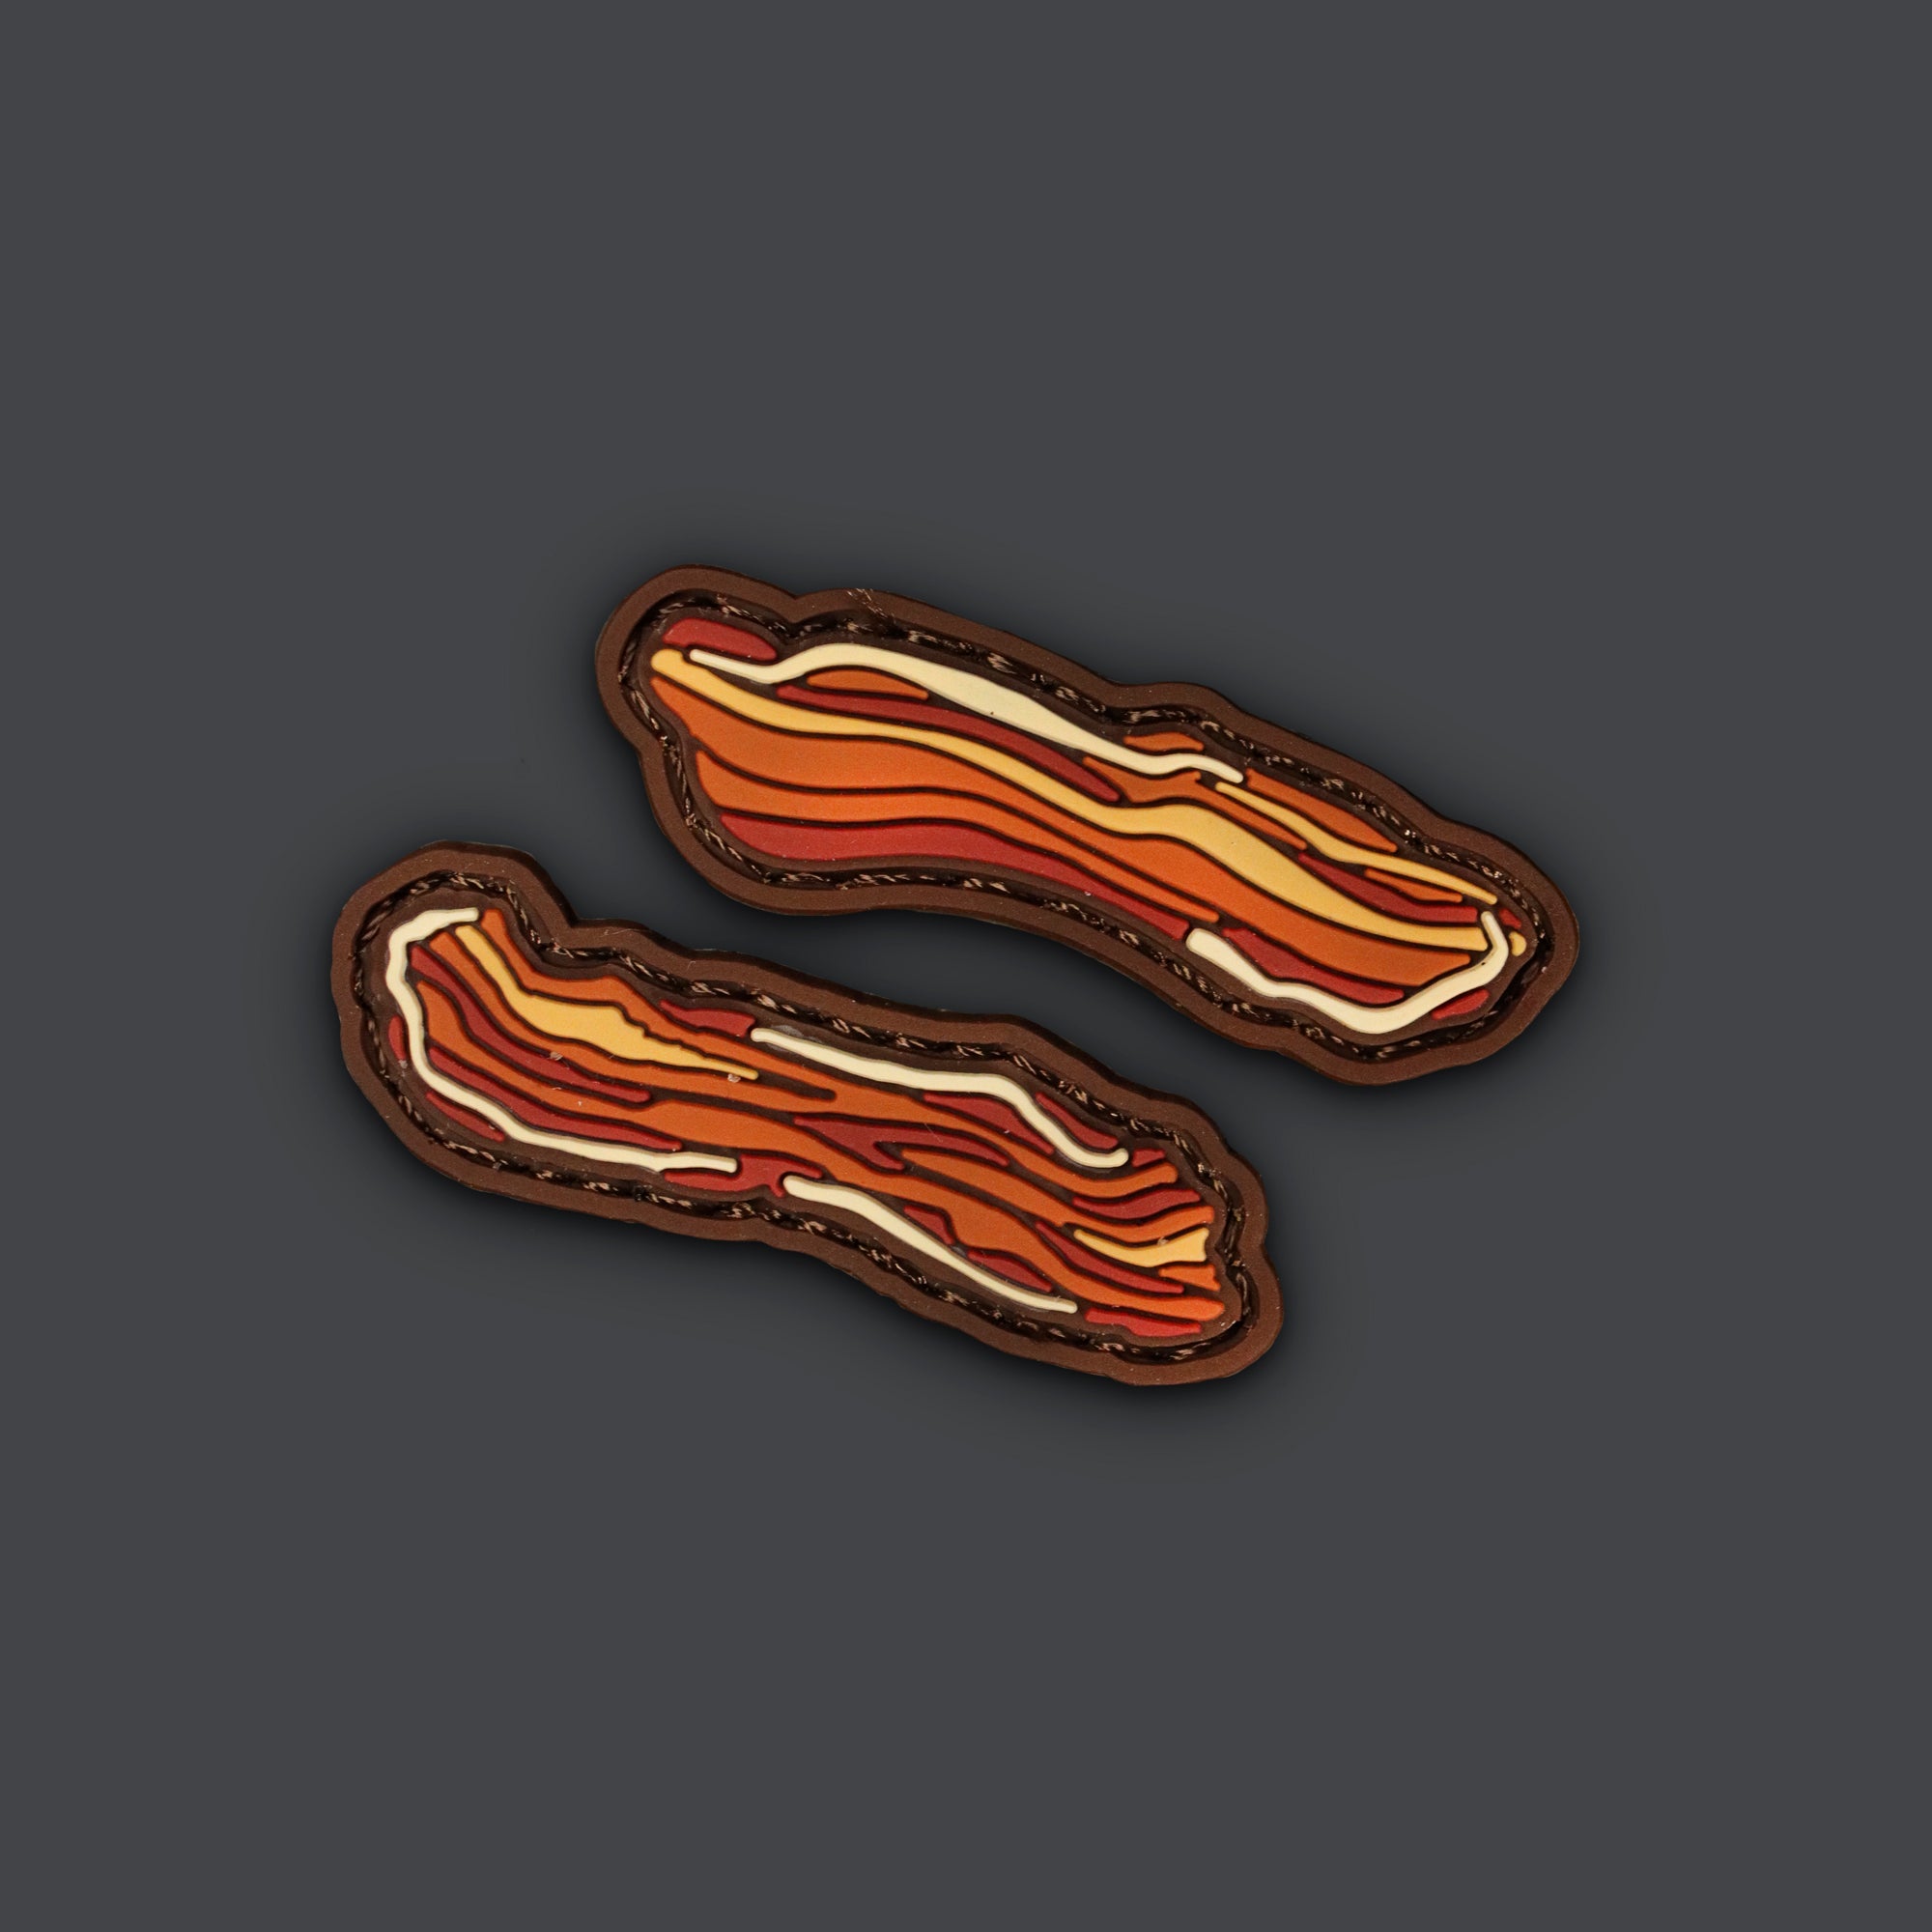  The Bacon Awareness Ribbon 3D PVC Morale Patch